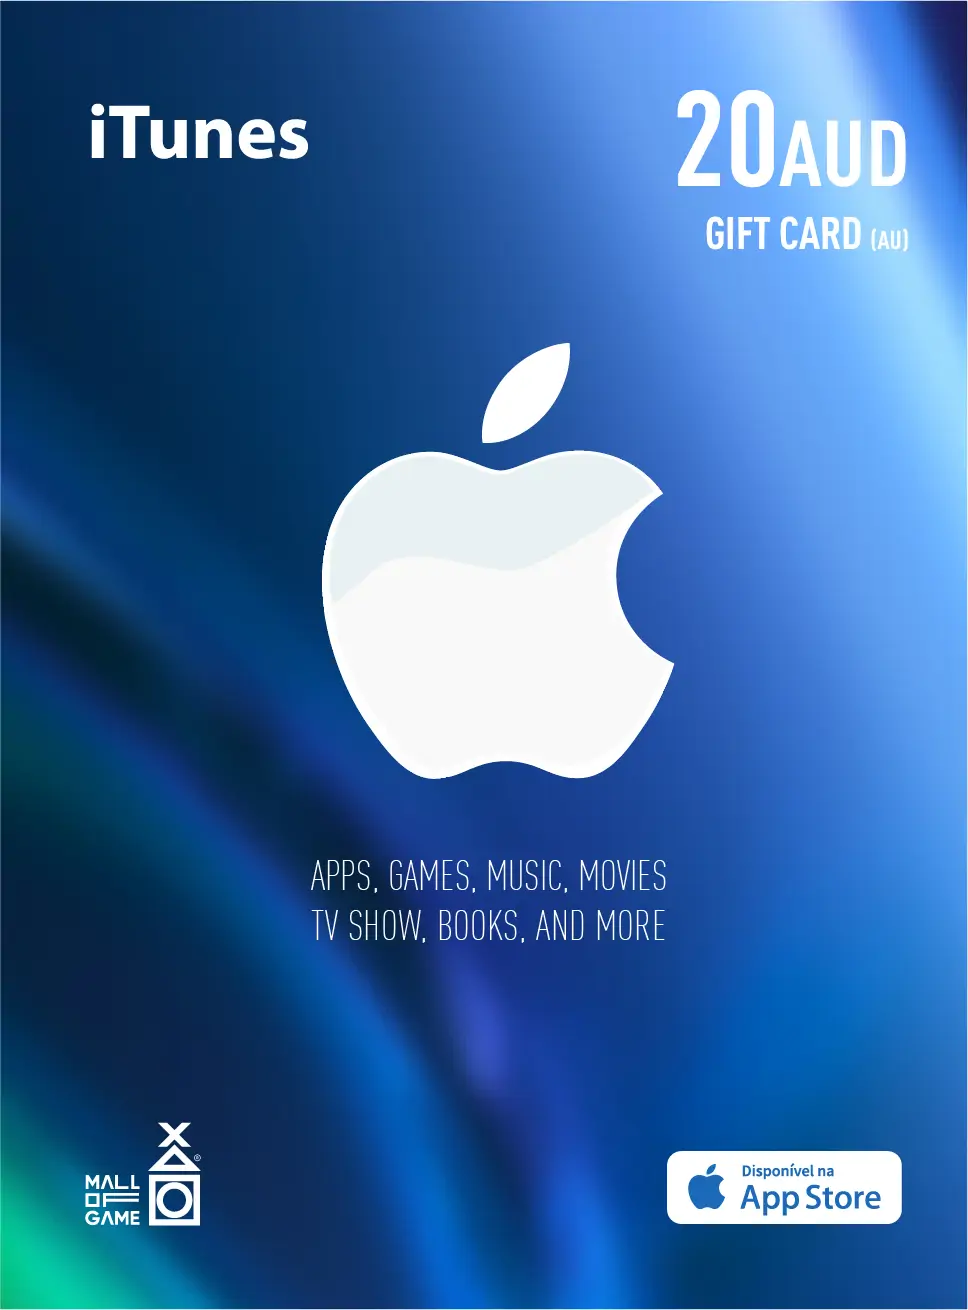 iTunes AUD20 Gift Card (AU)